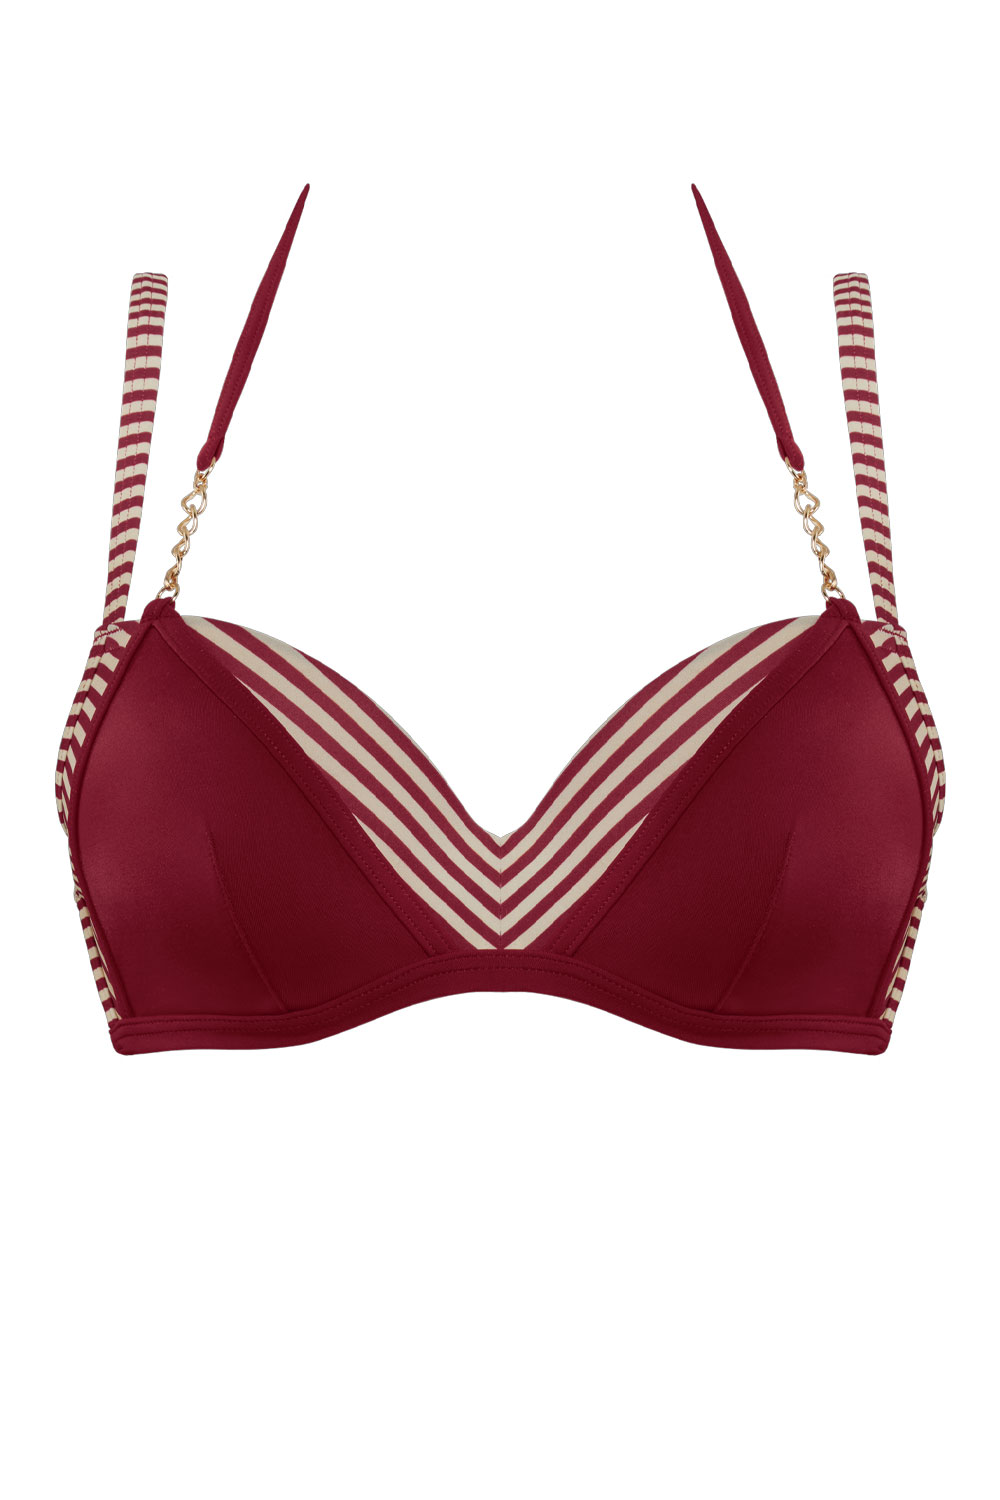 Marlies Dekkers Push-Up-Bikini-Oberteil Capitana 75E rot günstig online kaufen